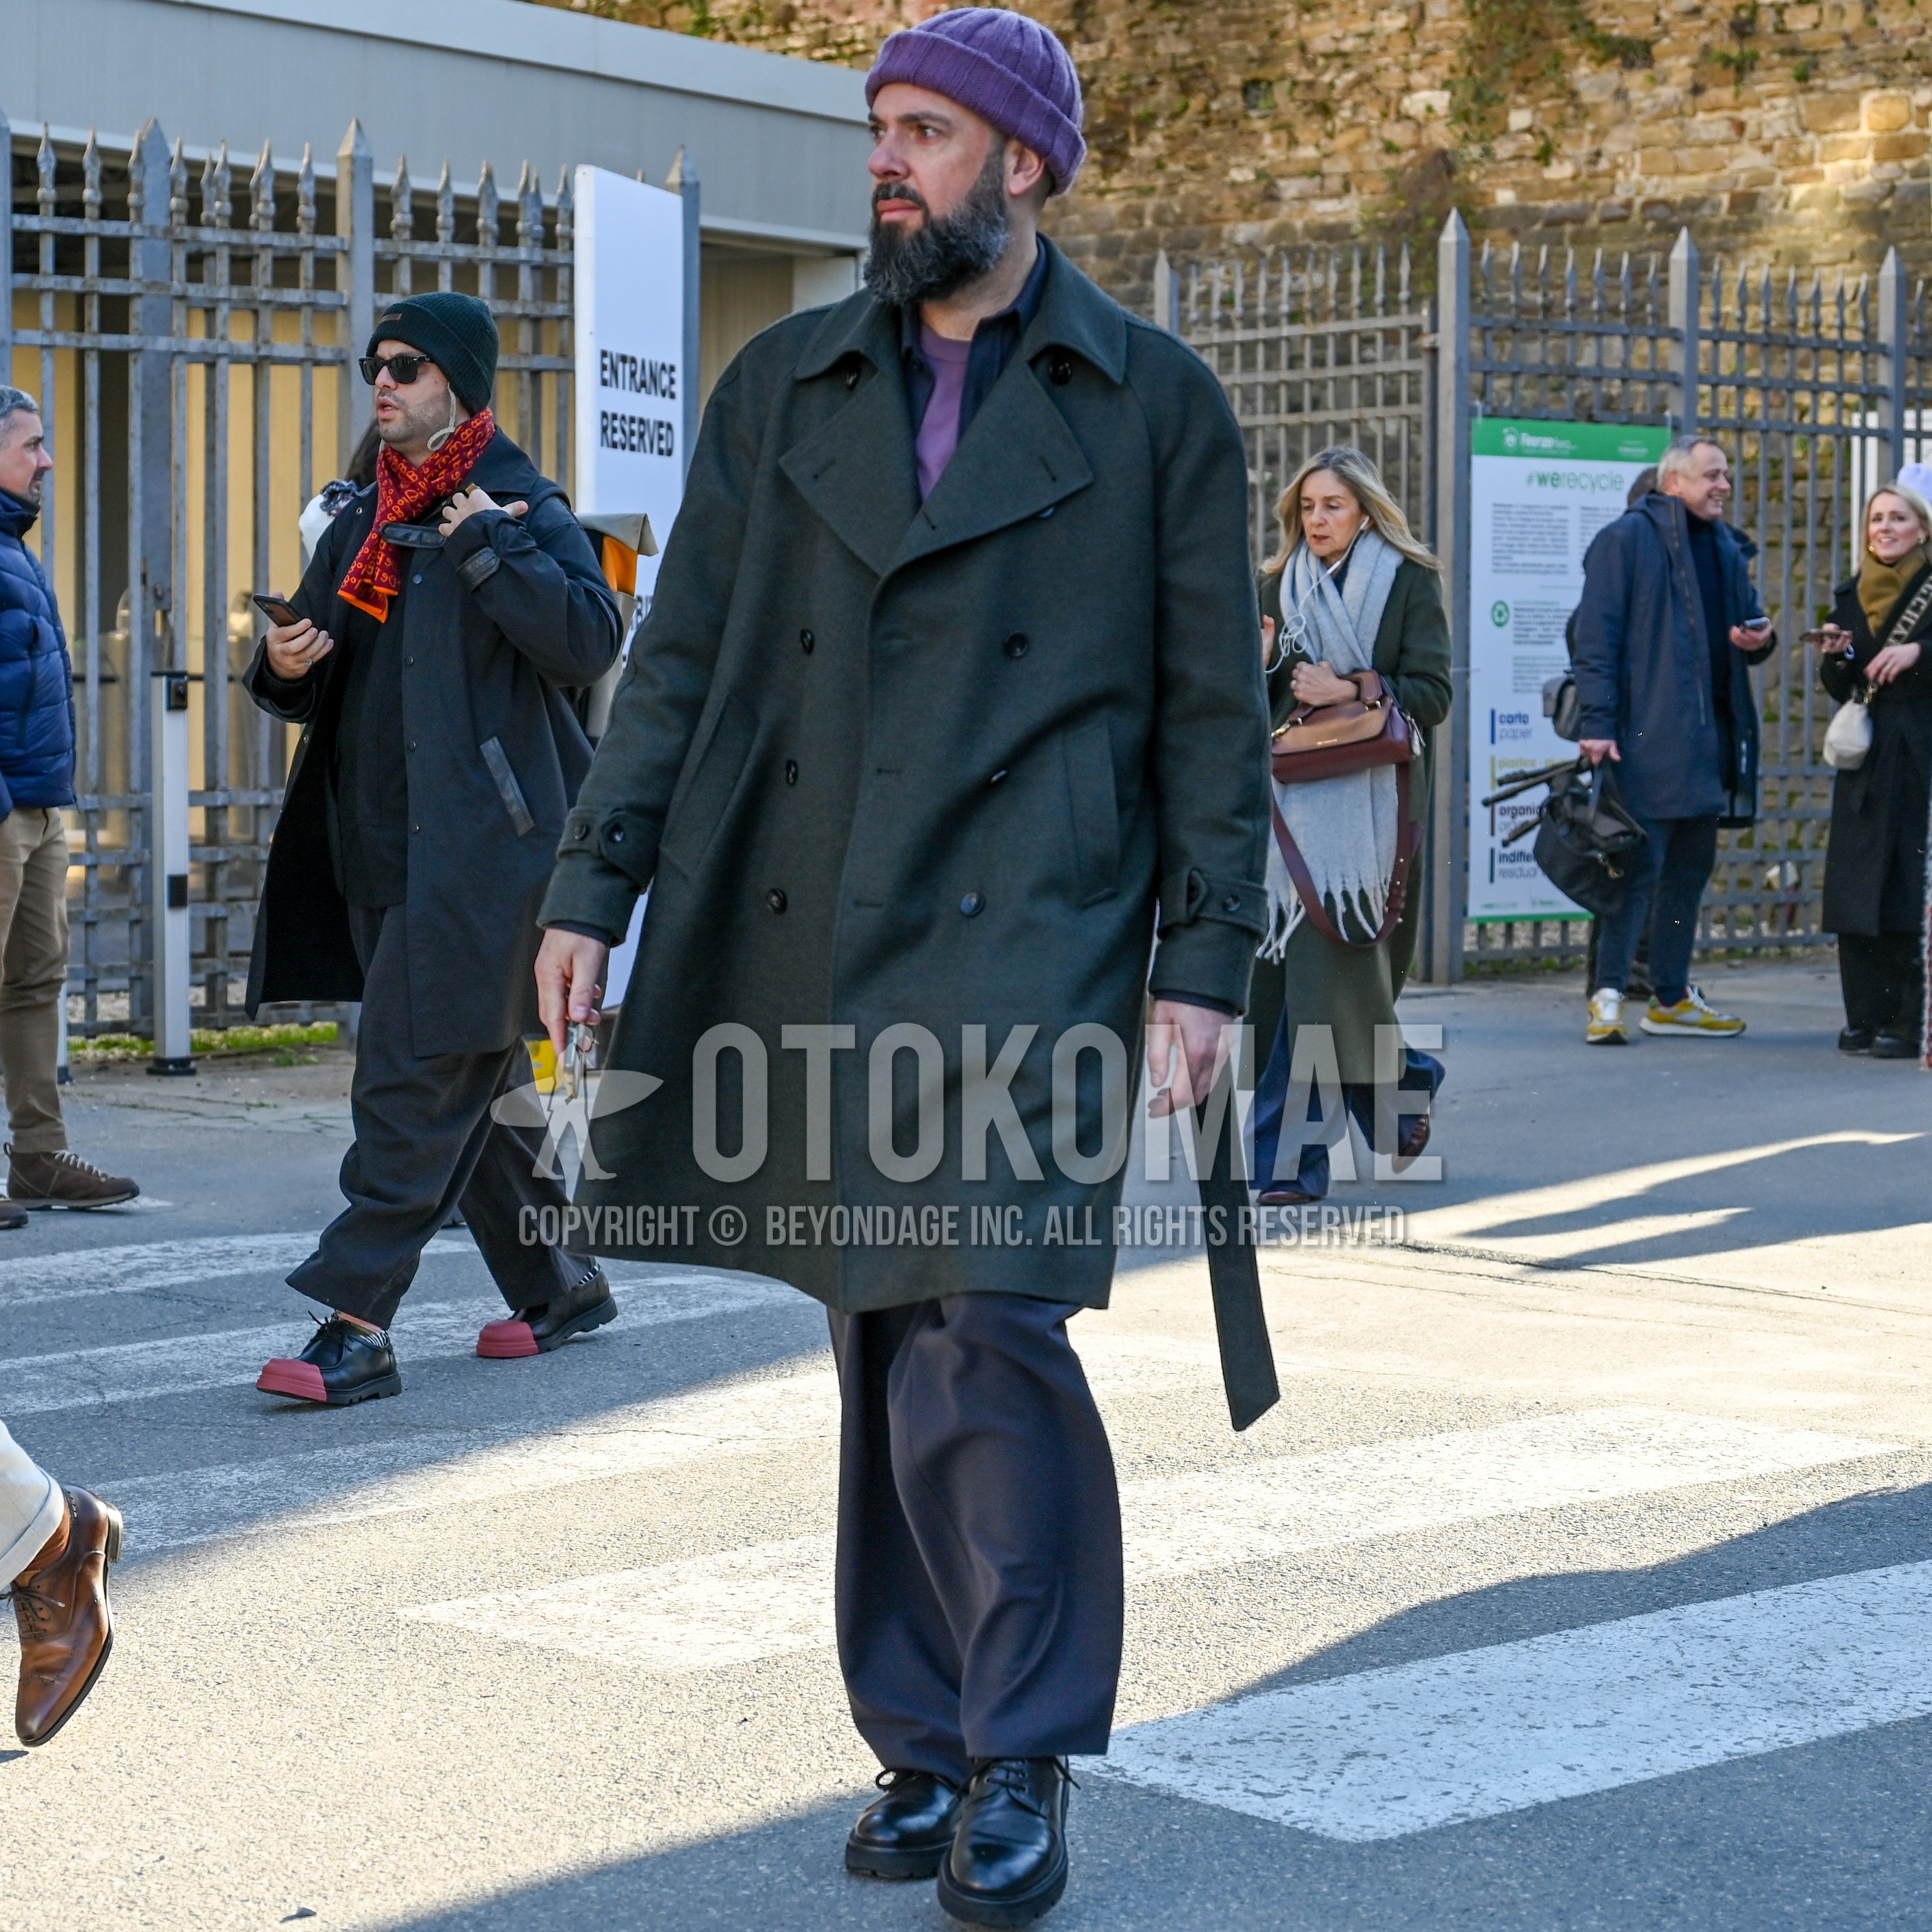 Men's autumn winter outfit with purple plain knit cap, dark gray plain chester coat, dark gray plain shirt, purple plain long sleeve t-shirt, dark gray plain slacks, black plain toe leather shoes.